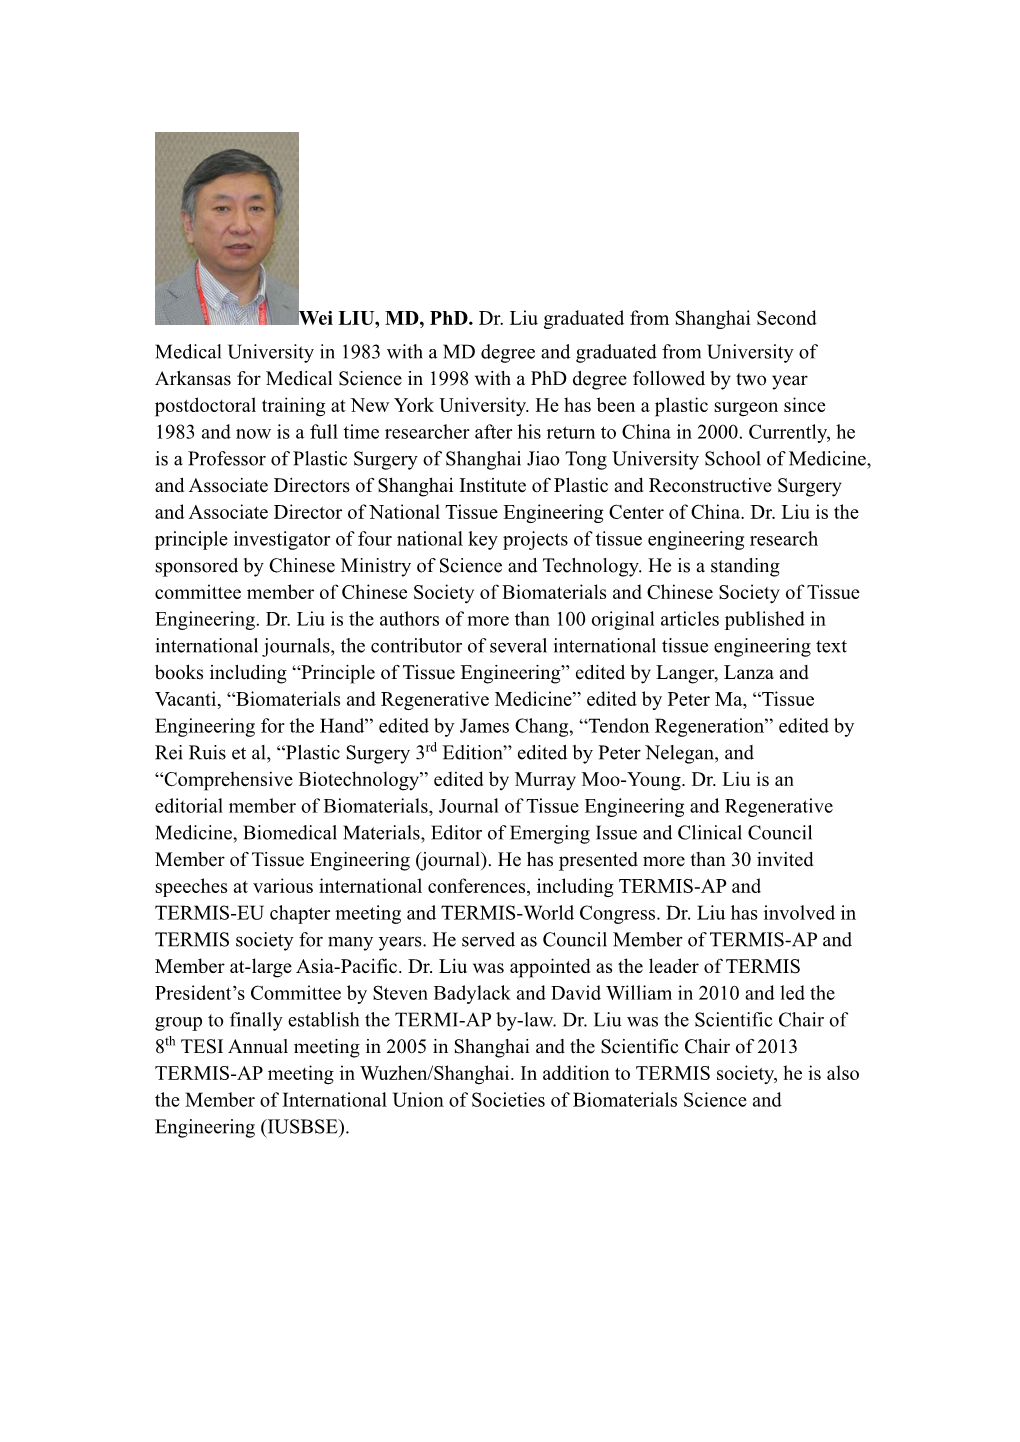 Wei LIU, MD, Phd. Dr. Liu Graduated from Shanghai Second Medical